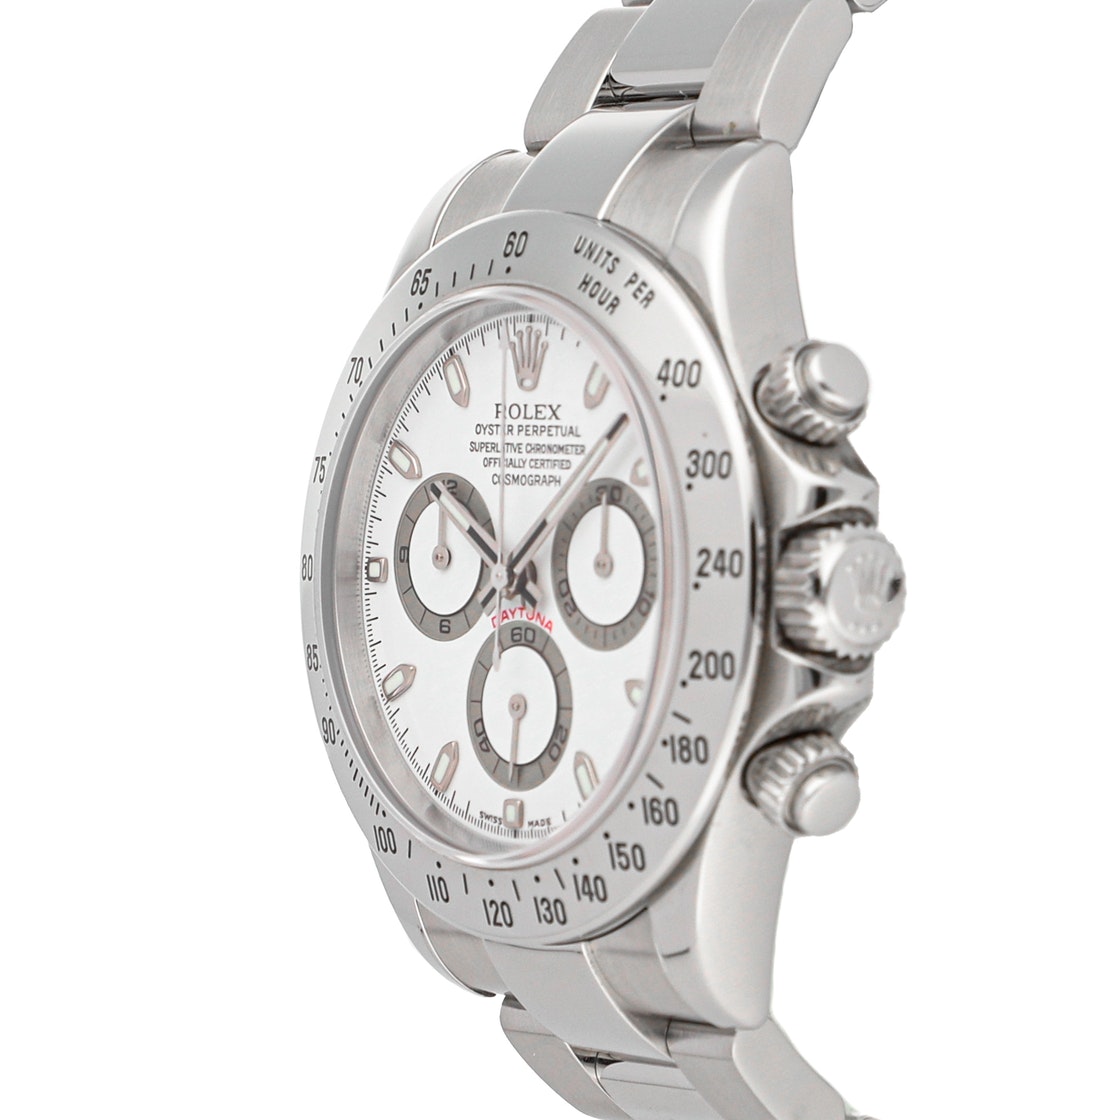 Rolex Daytona Ref 116520 white dial